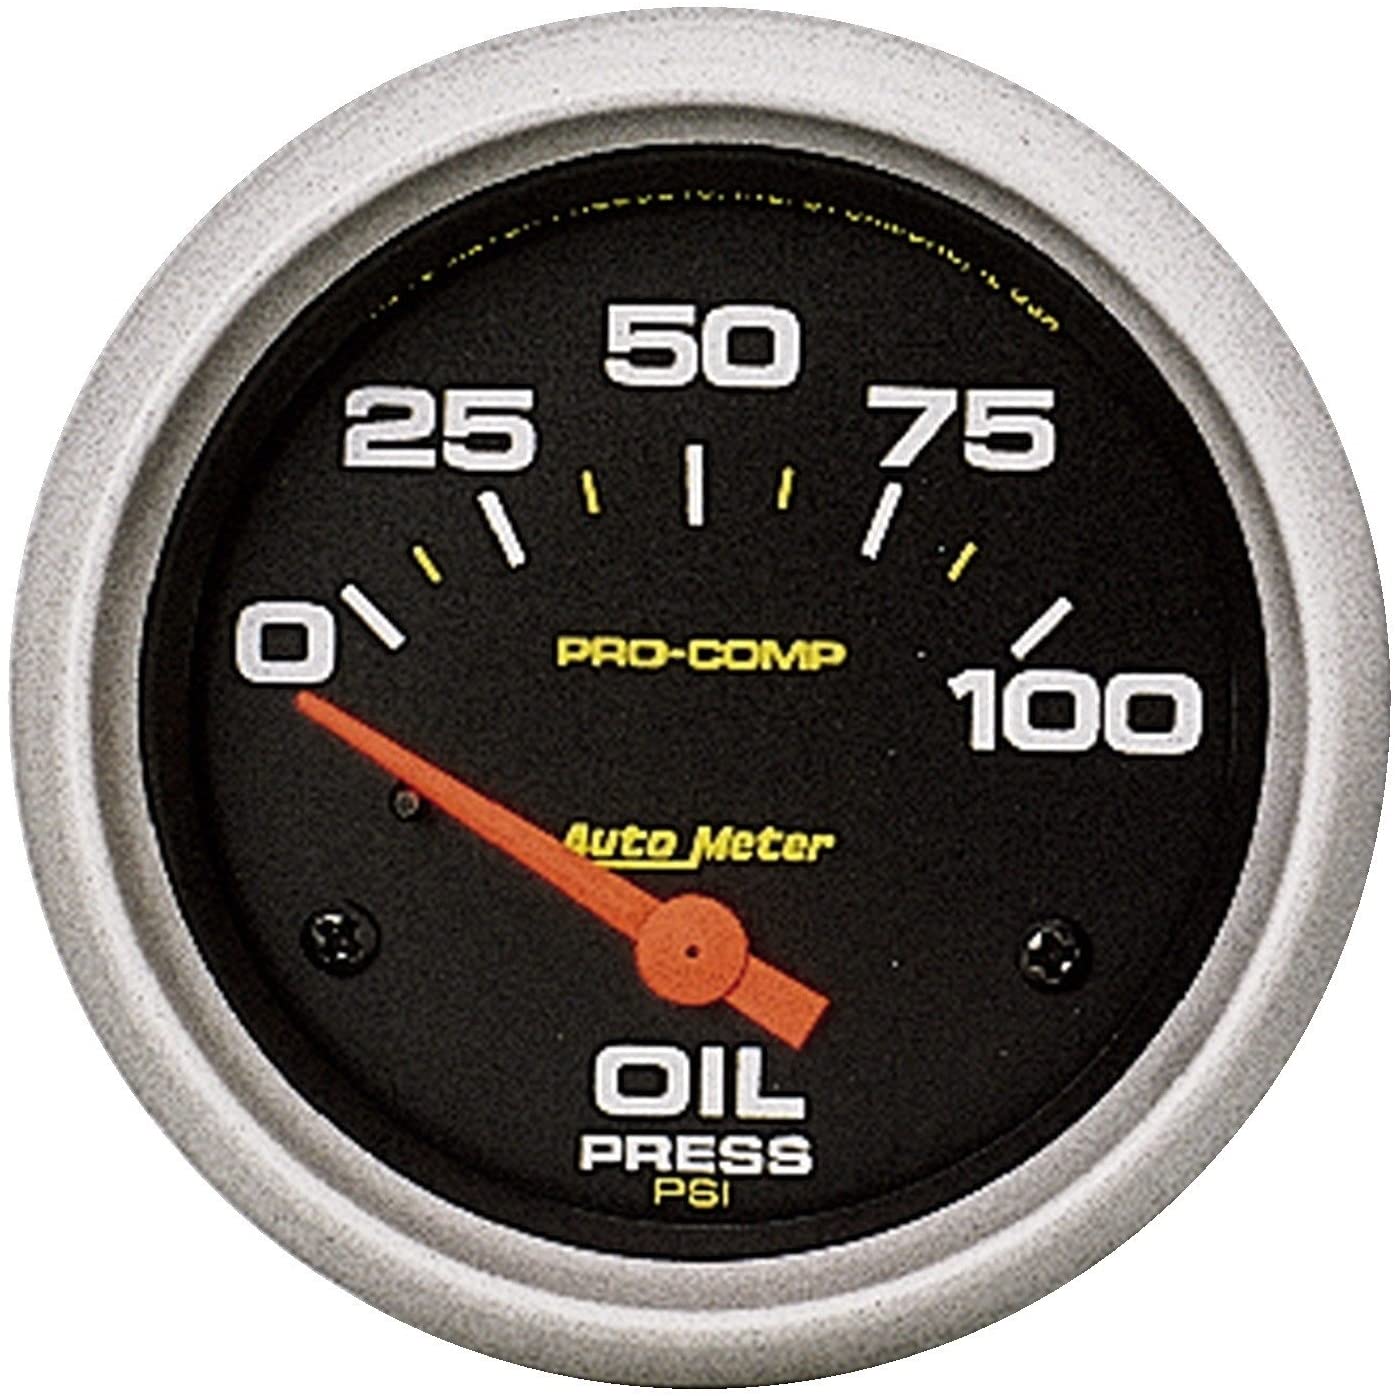 AUTO METER 5427 Pro-Comp Electric Oil Pressure Gauge, 2.625 in.